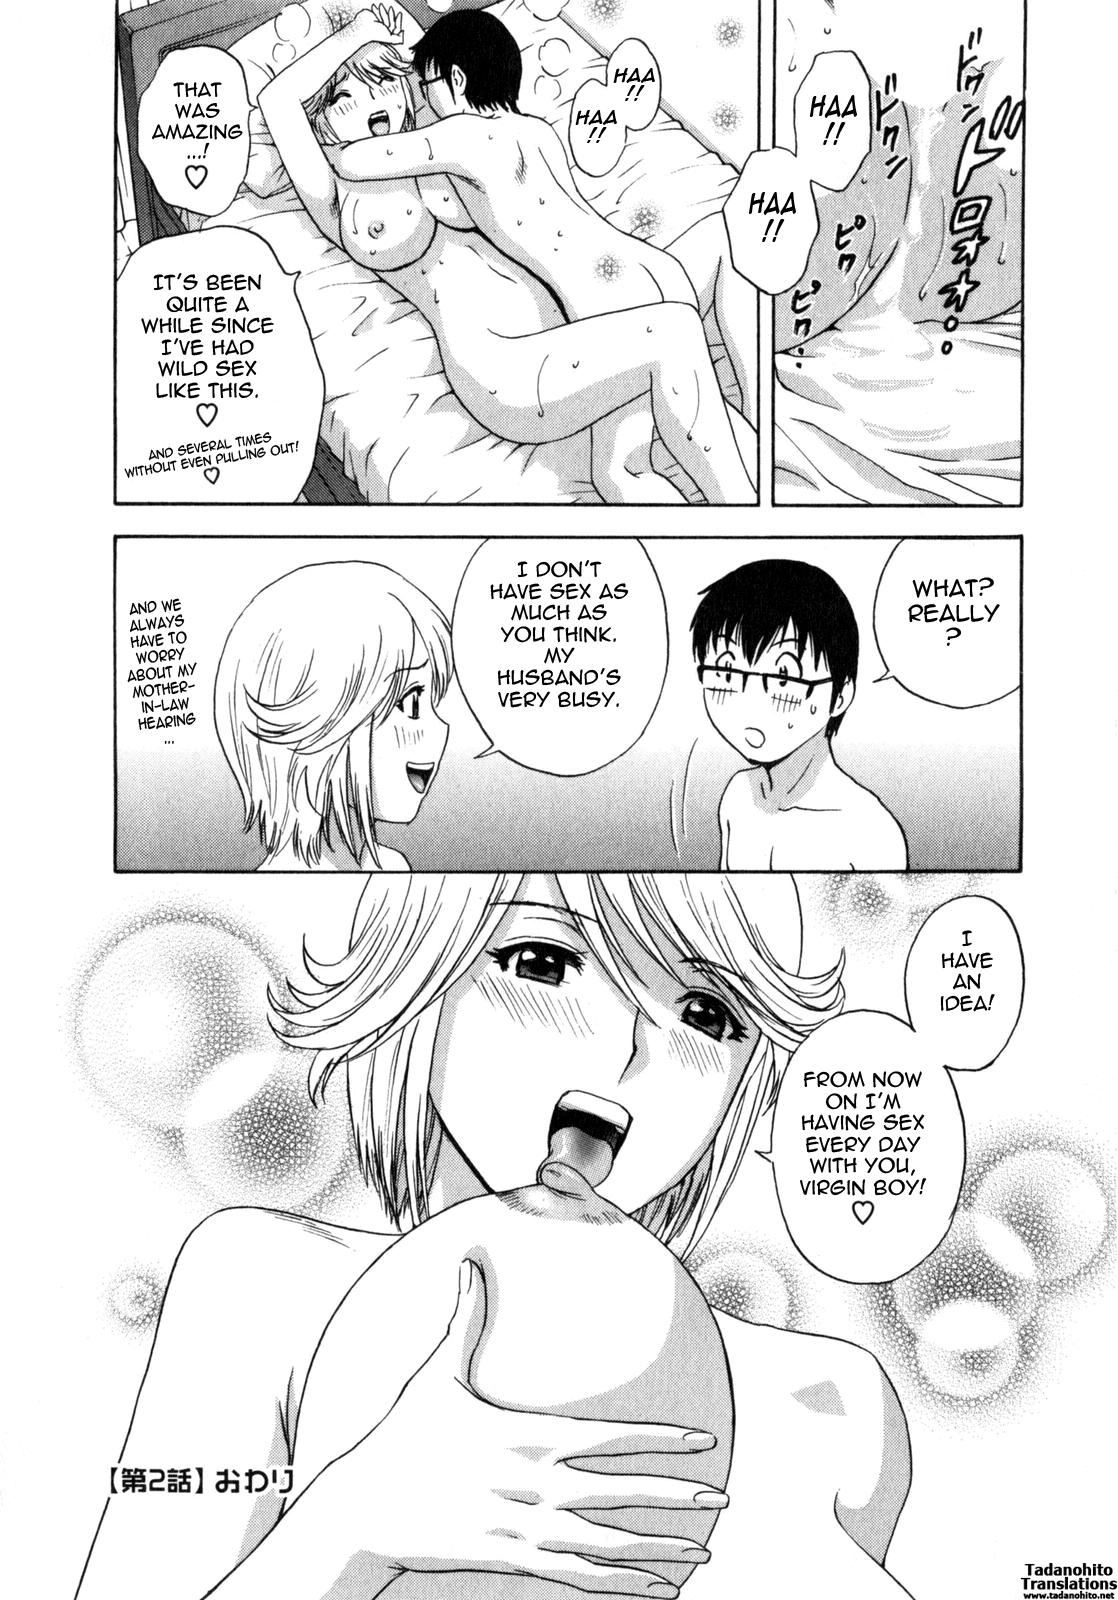 [Hidemaru] Life with Married Women Just Like a Manga 1 - Ch. 1-2 [English] {Tadanohito} 43